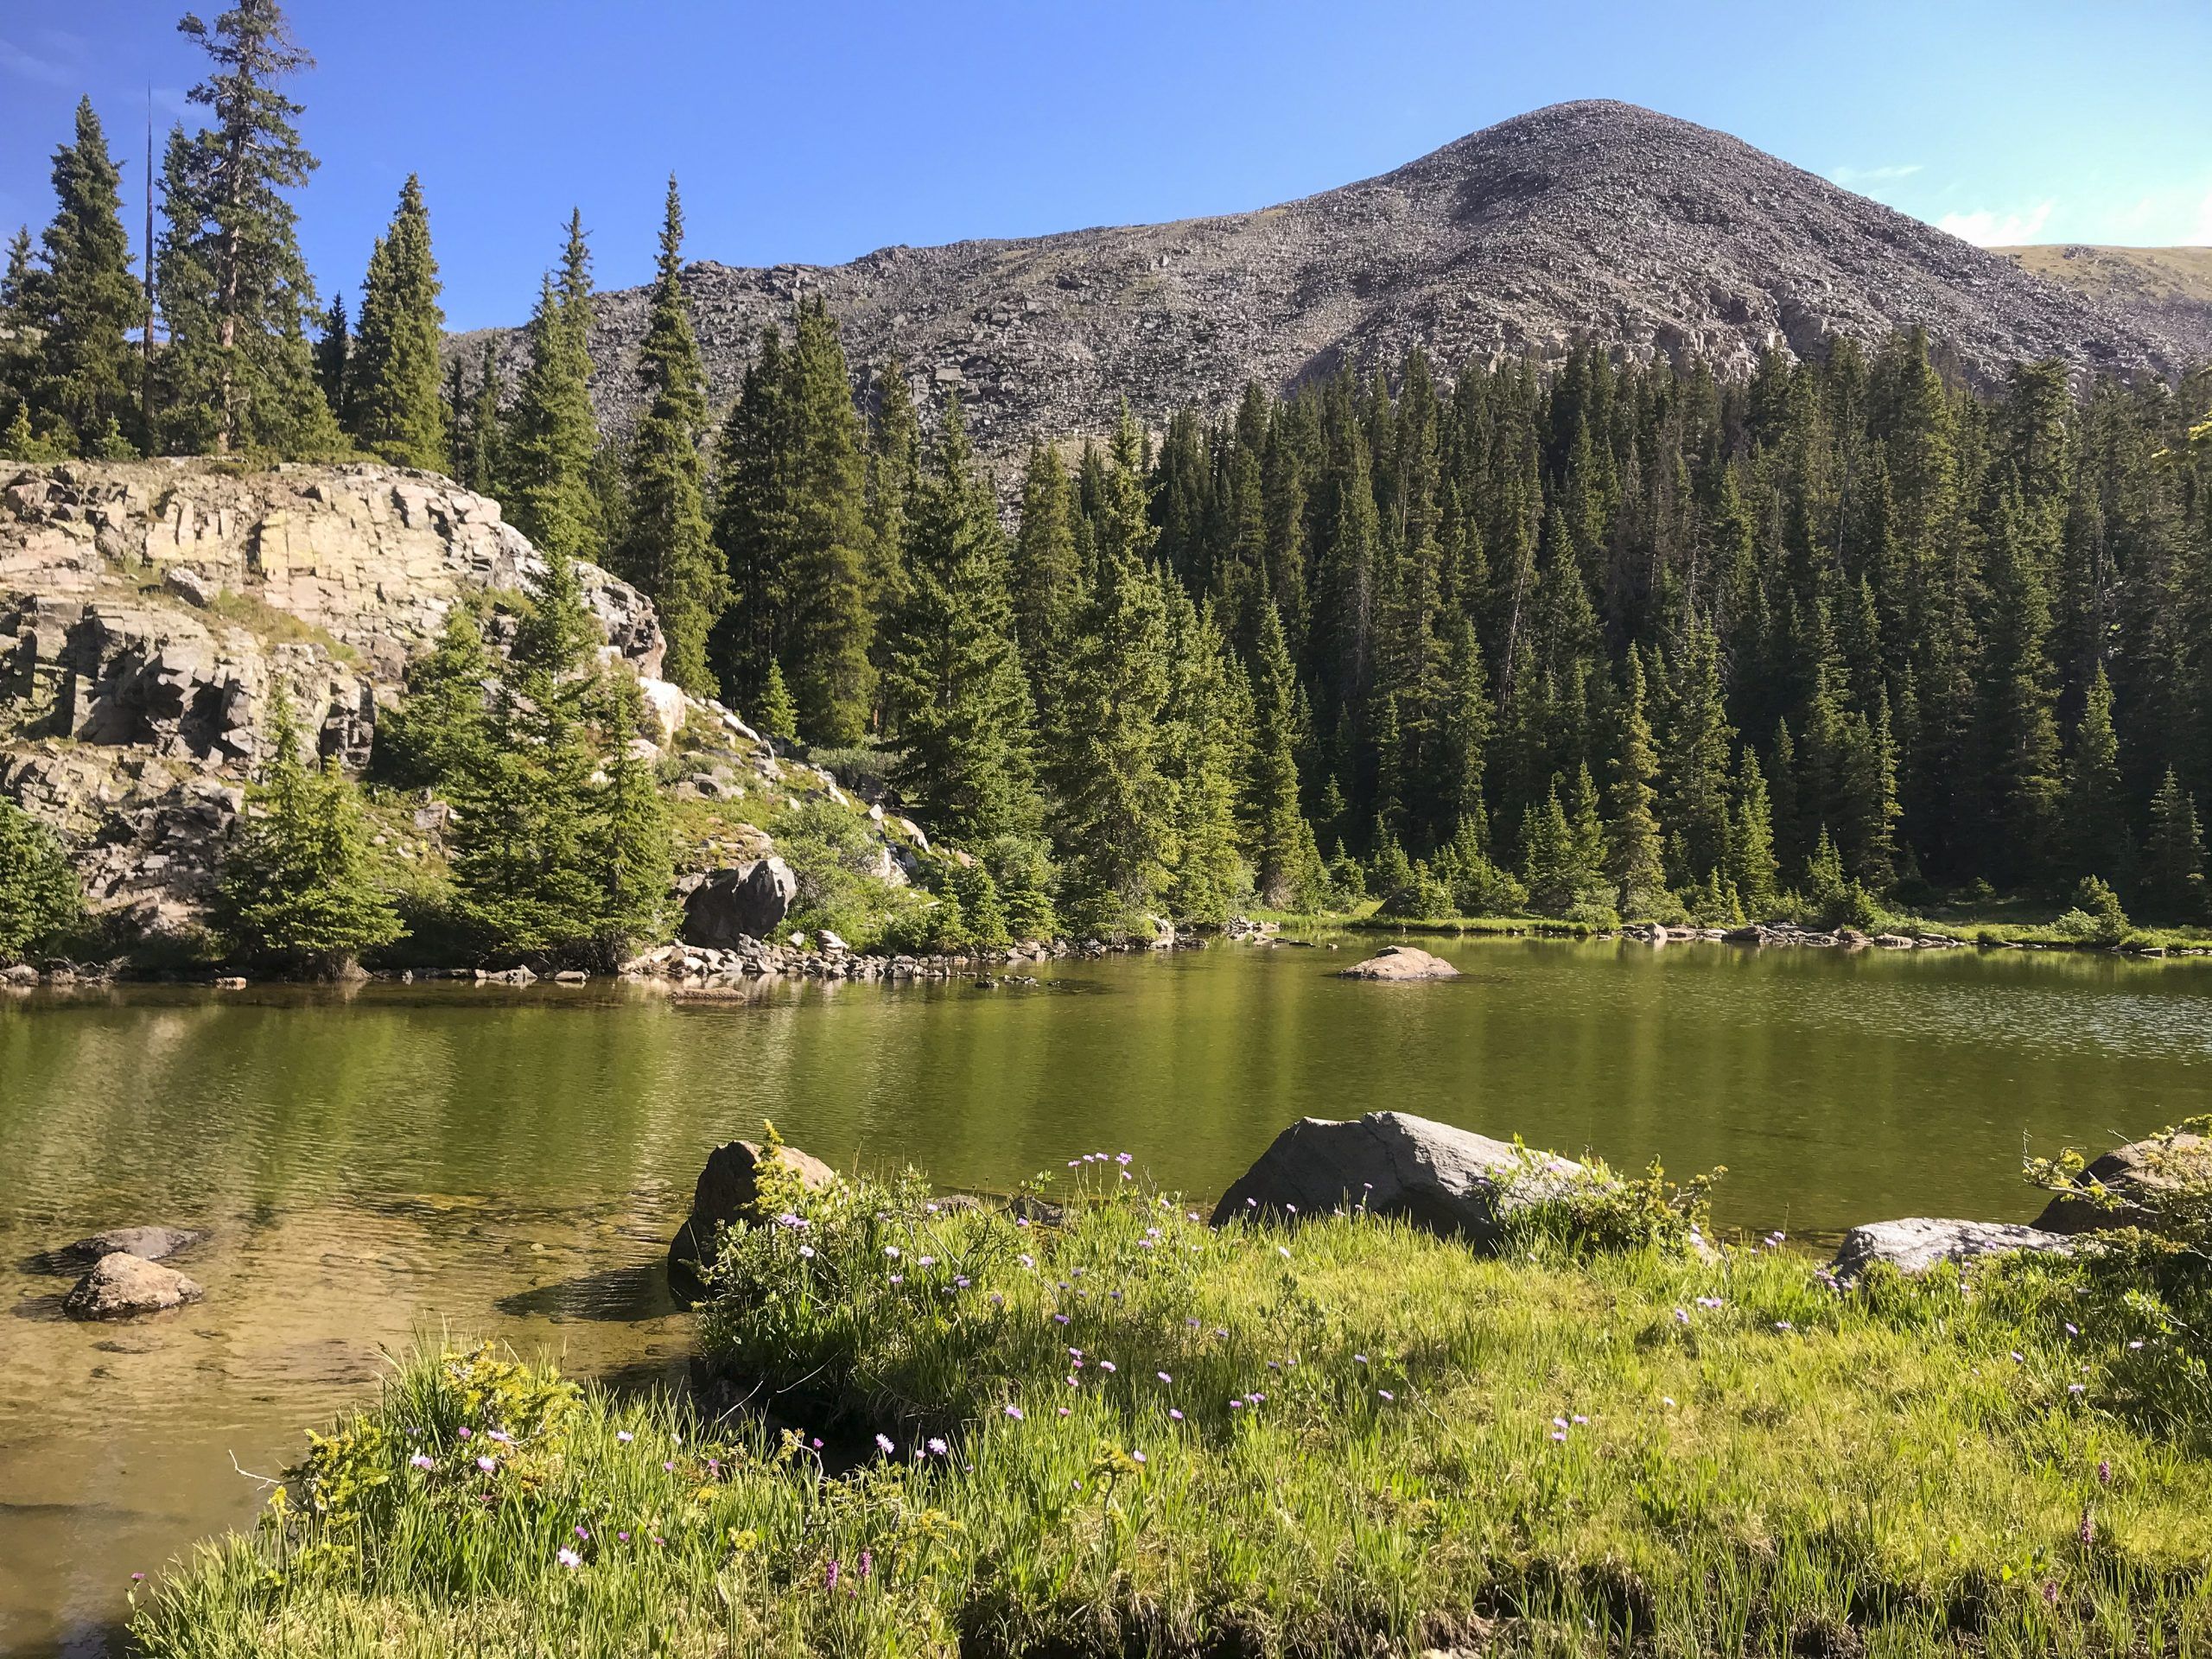 A nature scene of a lake, lake shore, trees and a mountain peak